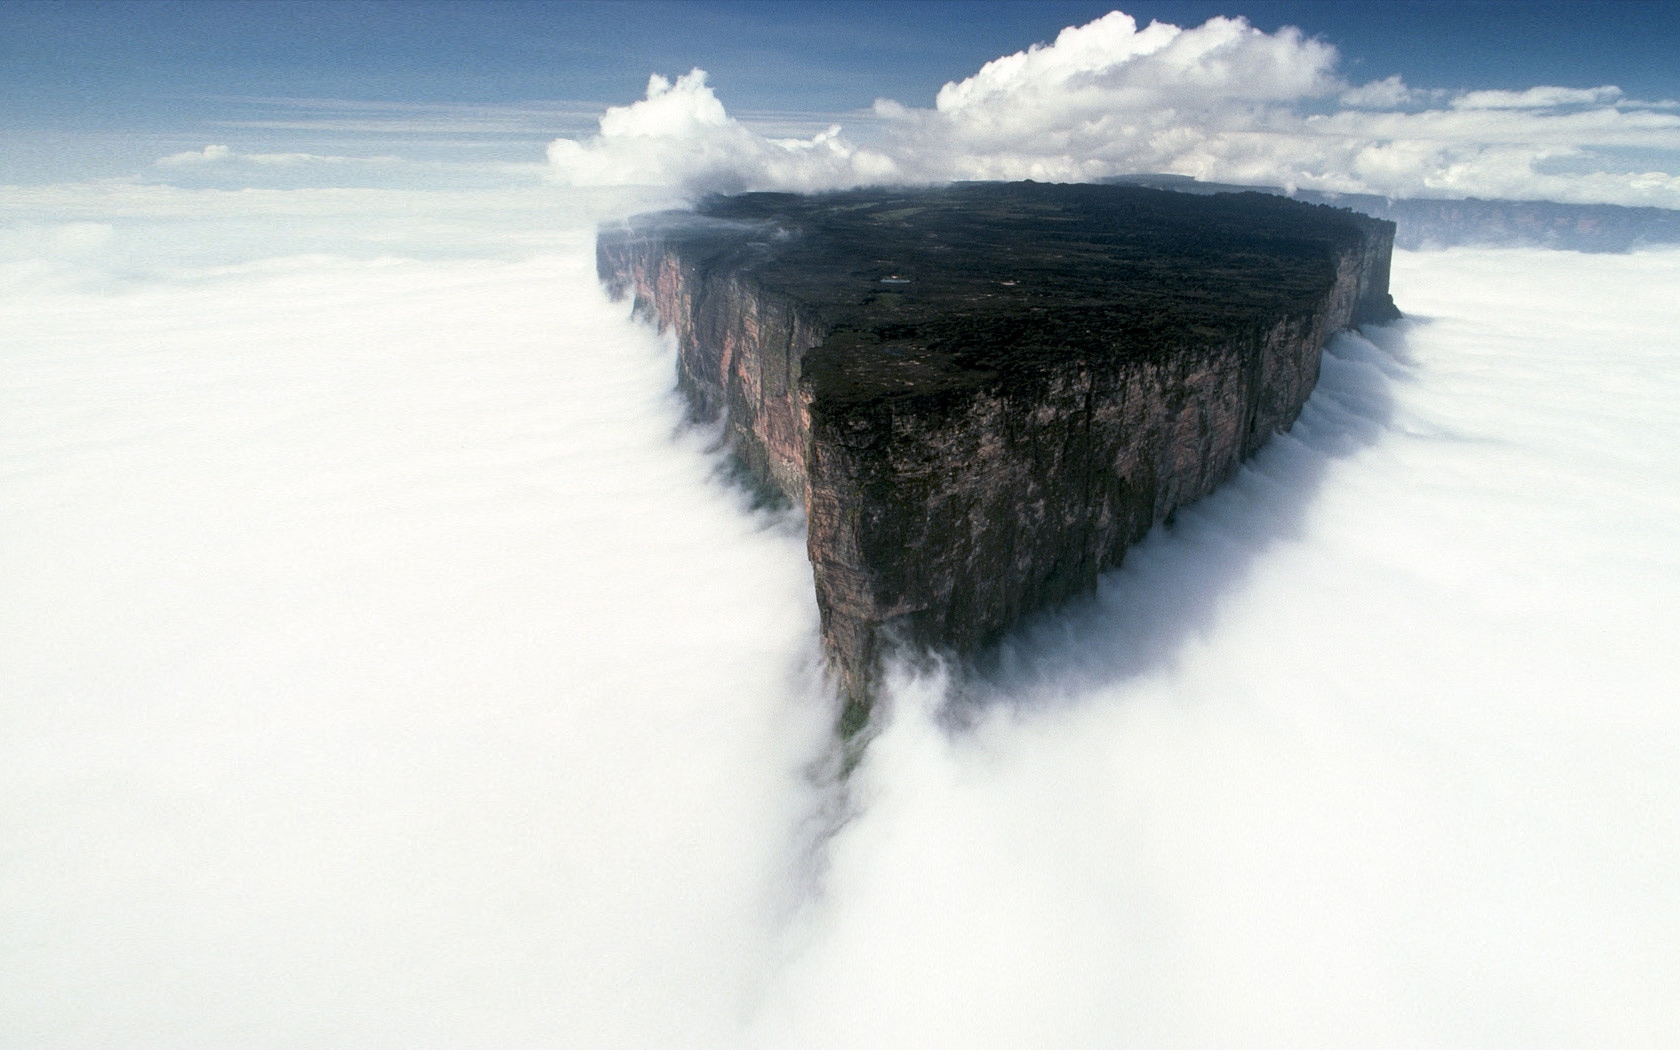 Majestic mountain peak enveloped in clouds.